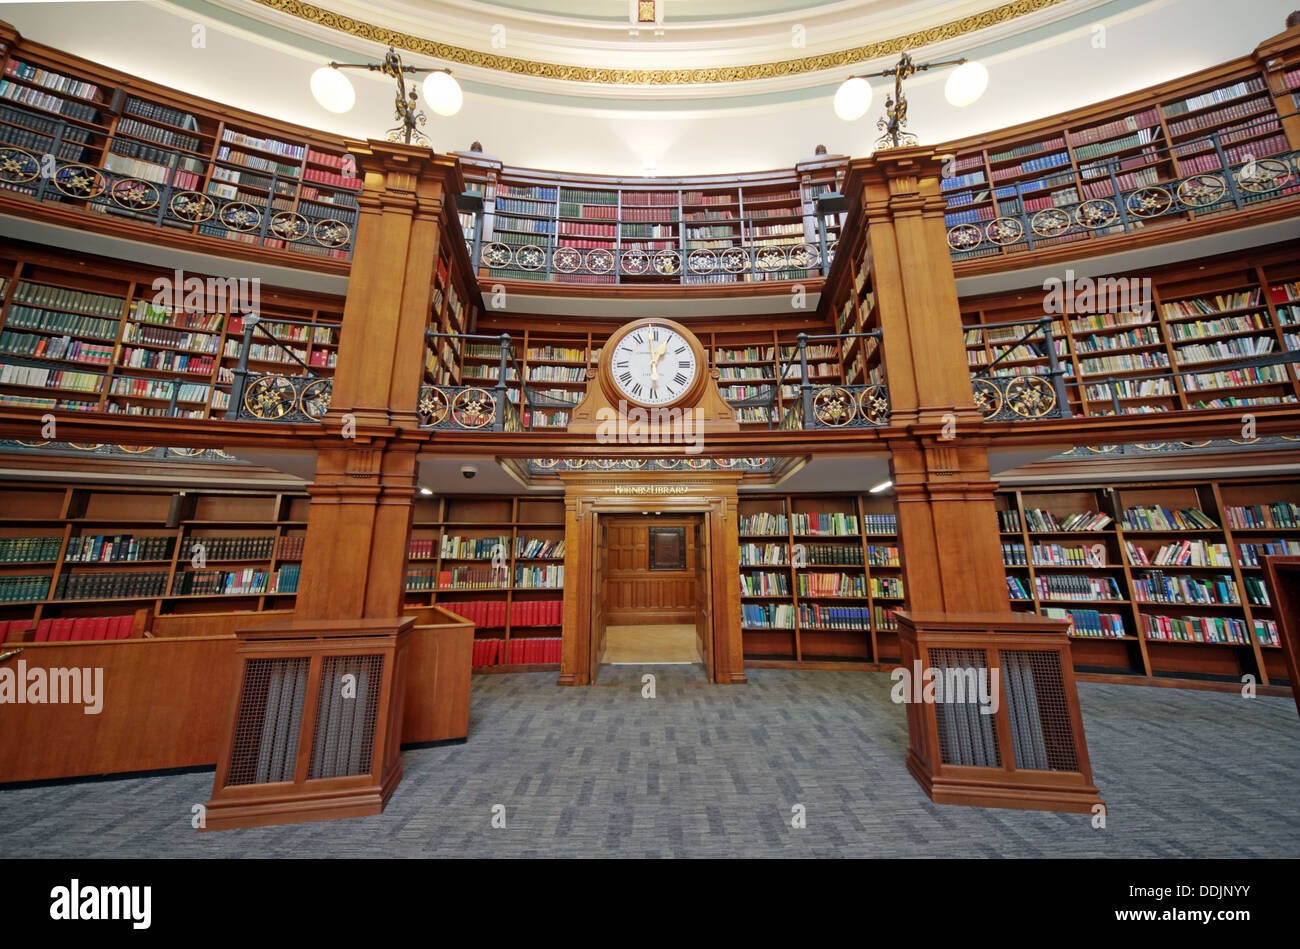 Uhr über Tür zu Honby Bibliothek, Liverpool central Library Picton Lesesäle Stockfoto